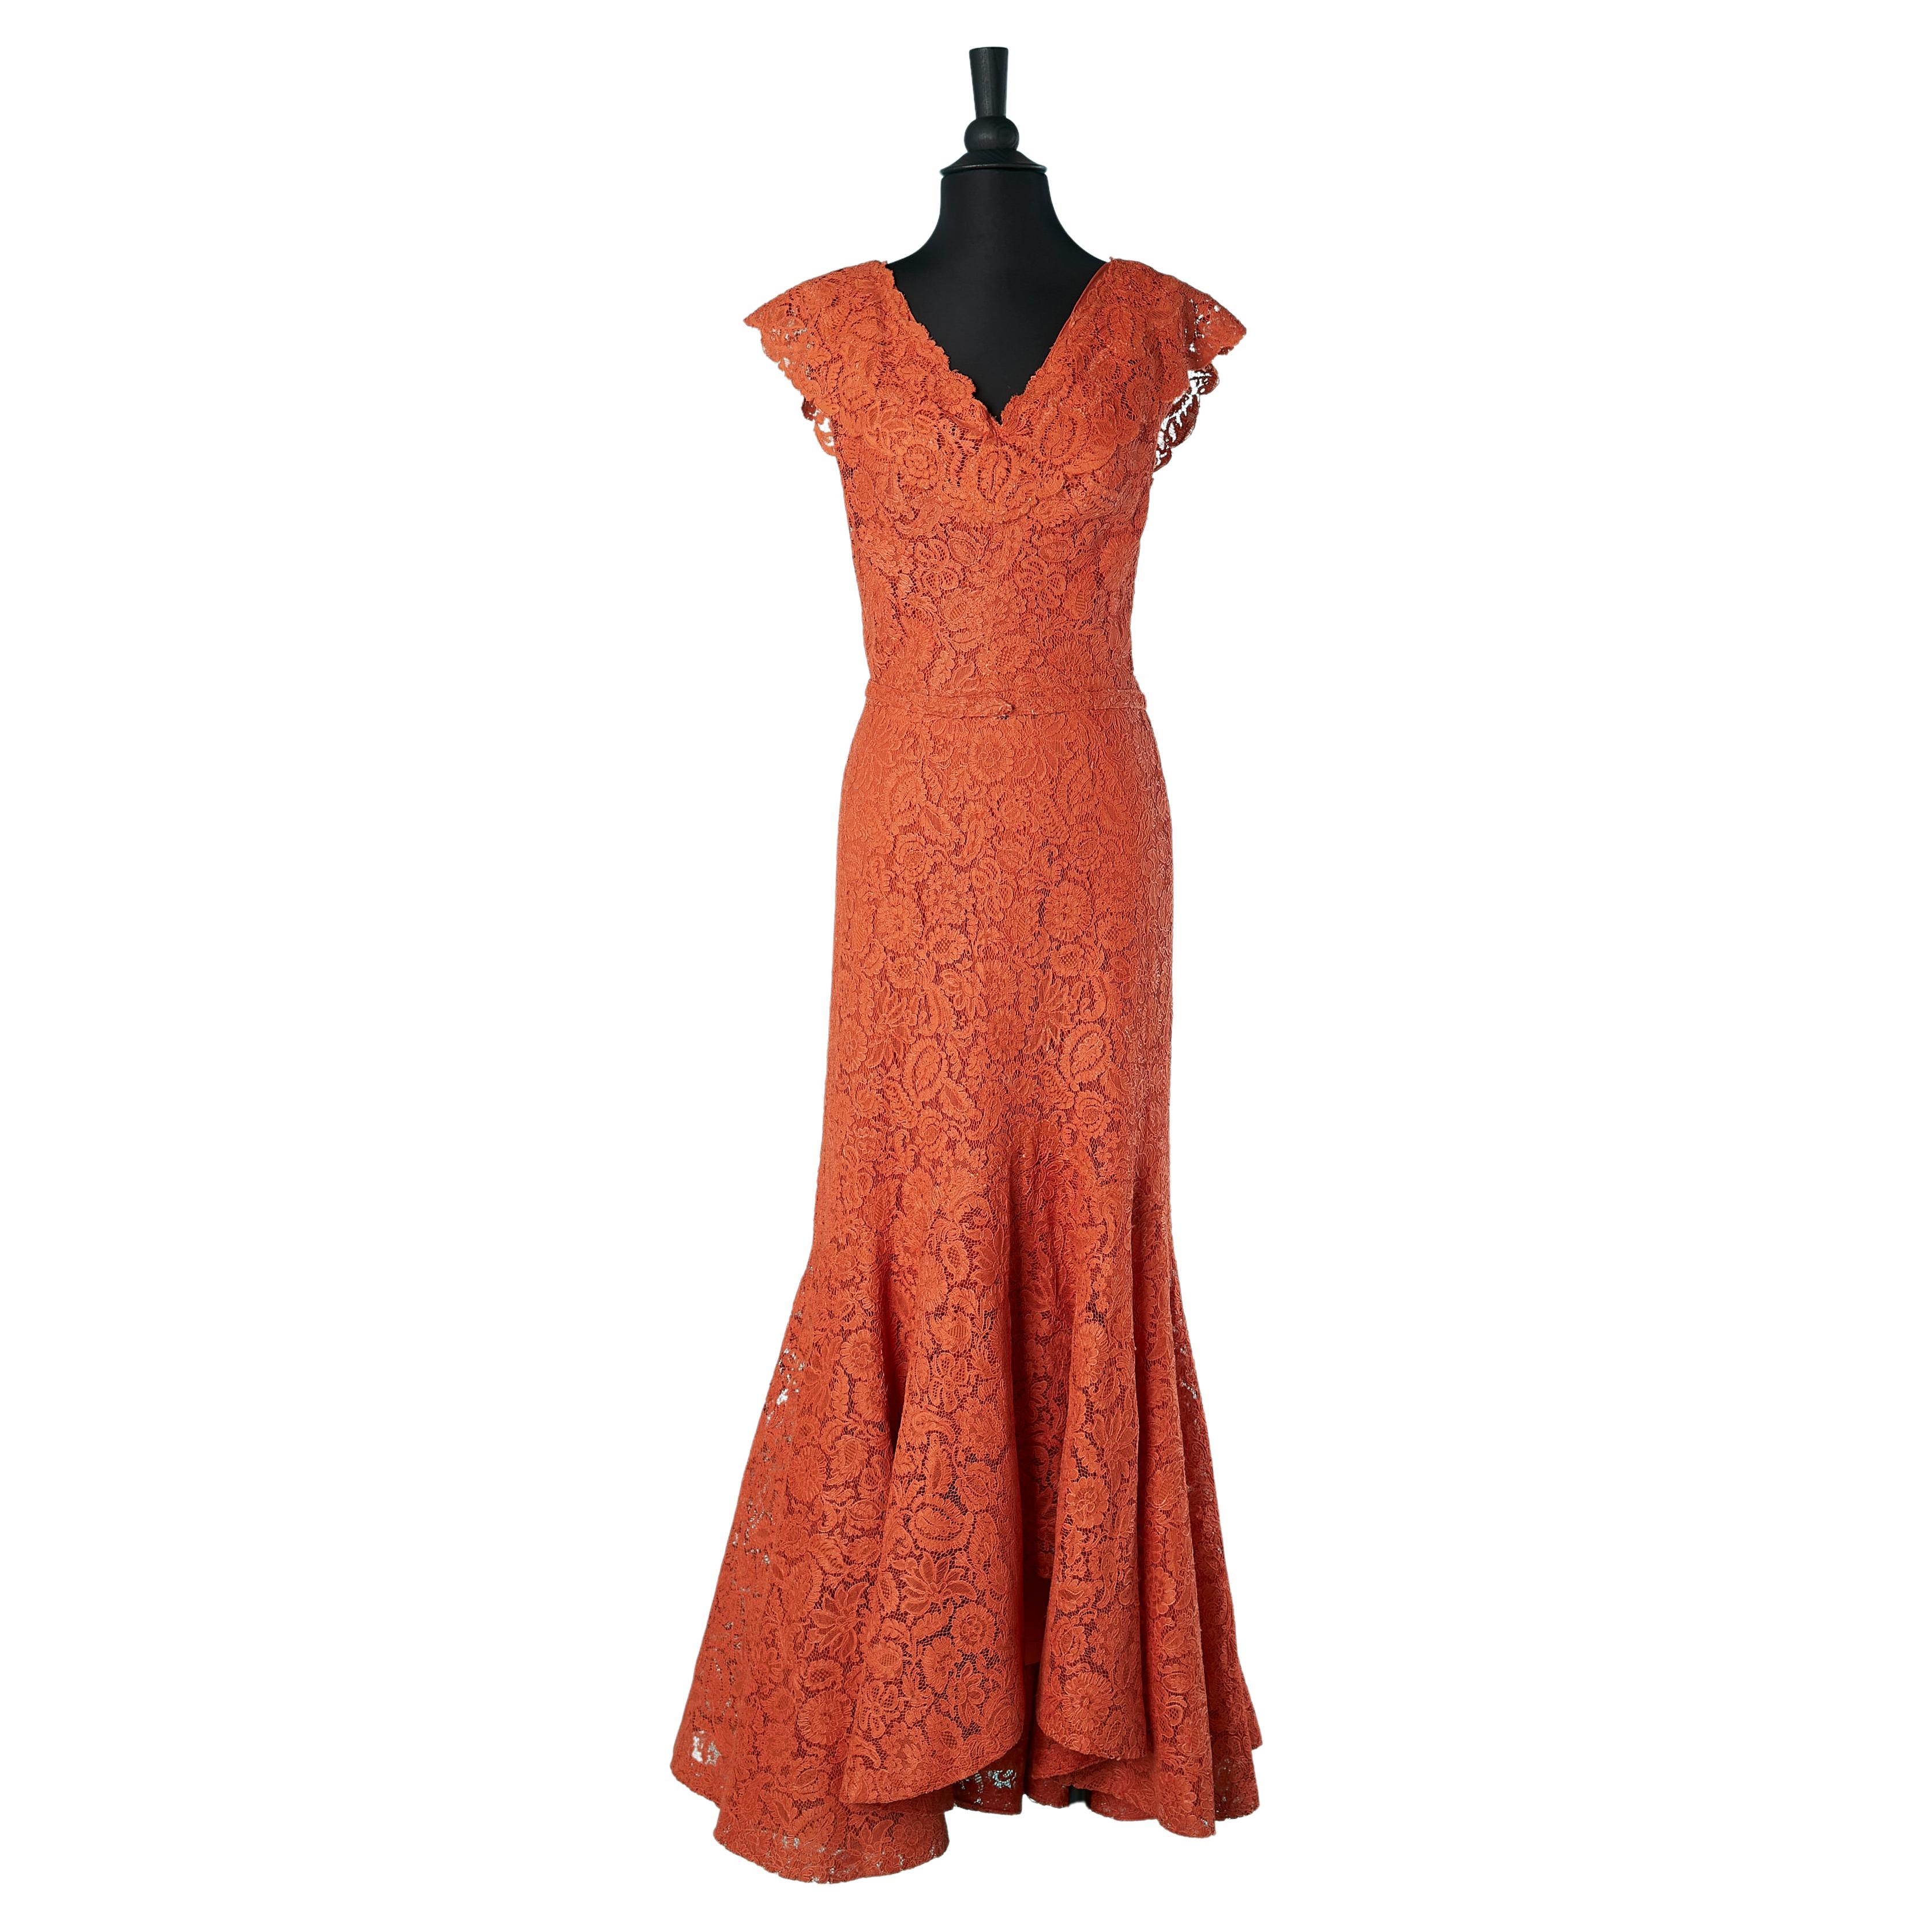 Orange lace evening dress mermaid gown Ballet INC Circa 1950's 